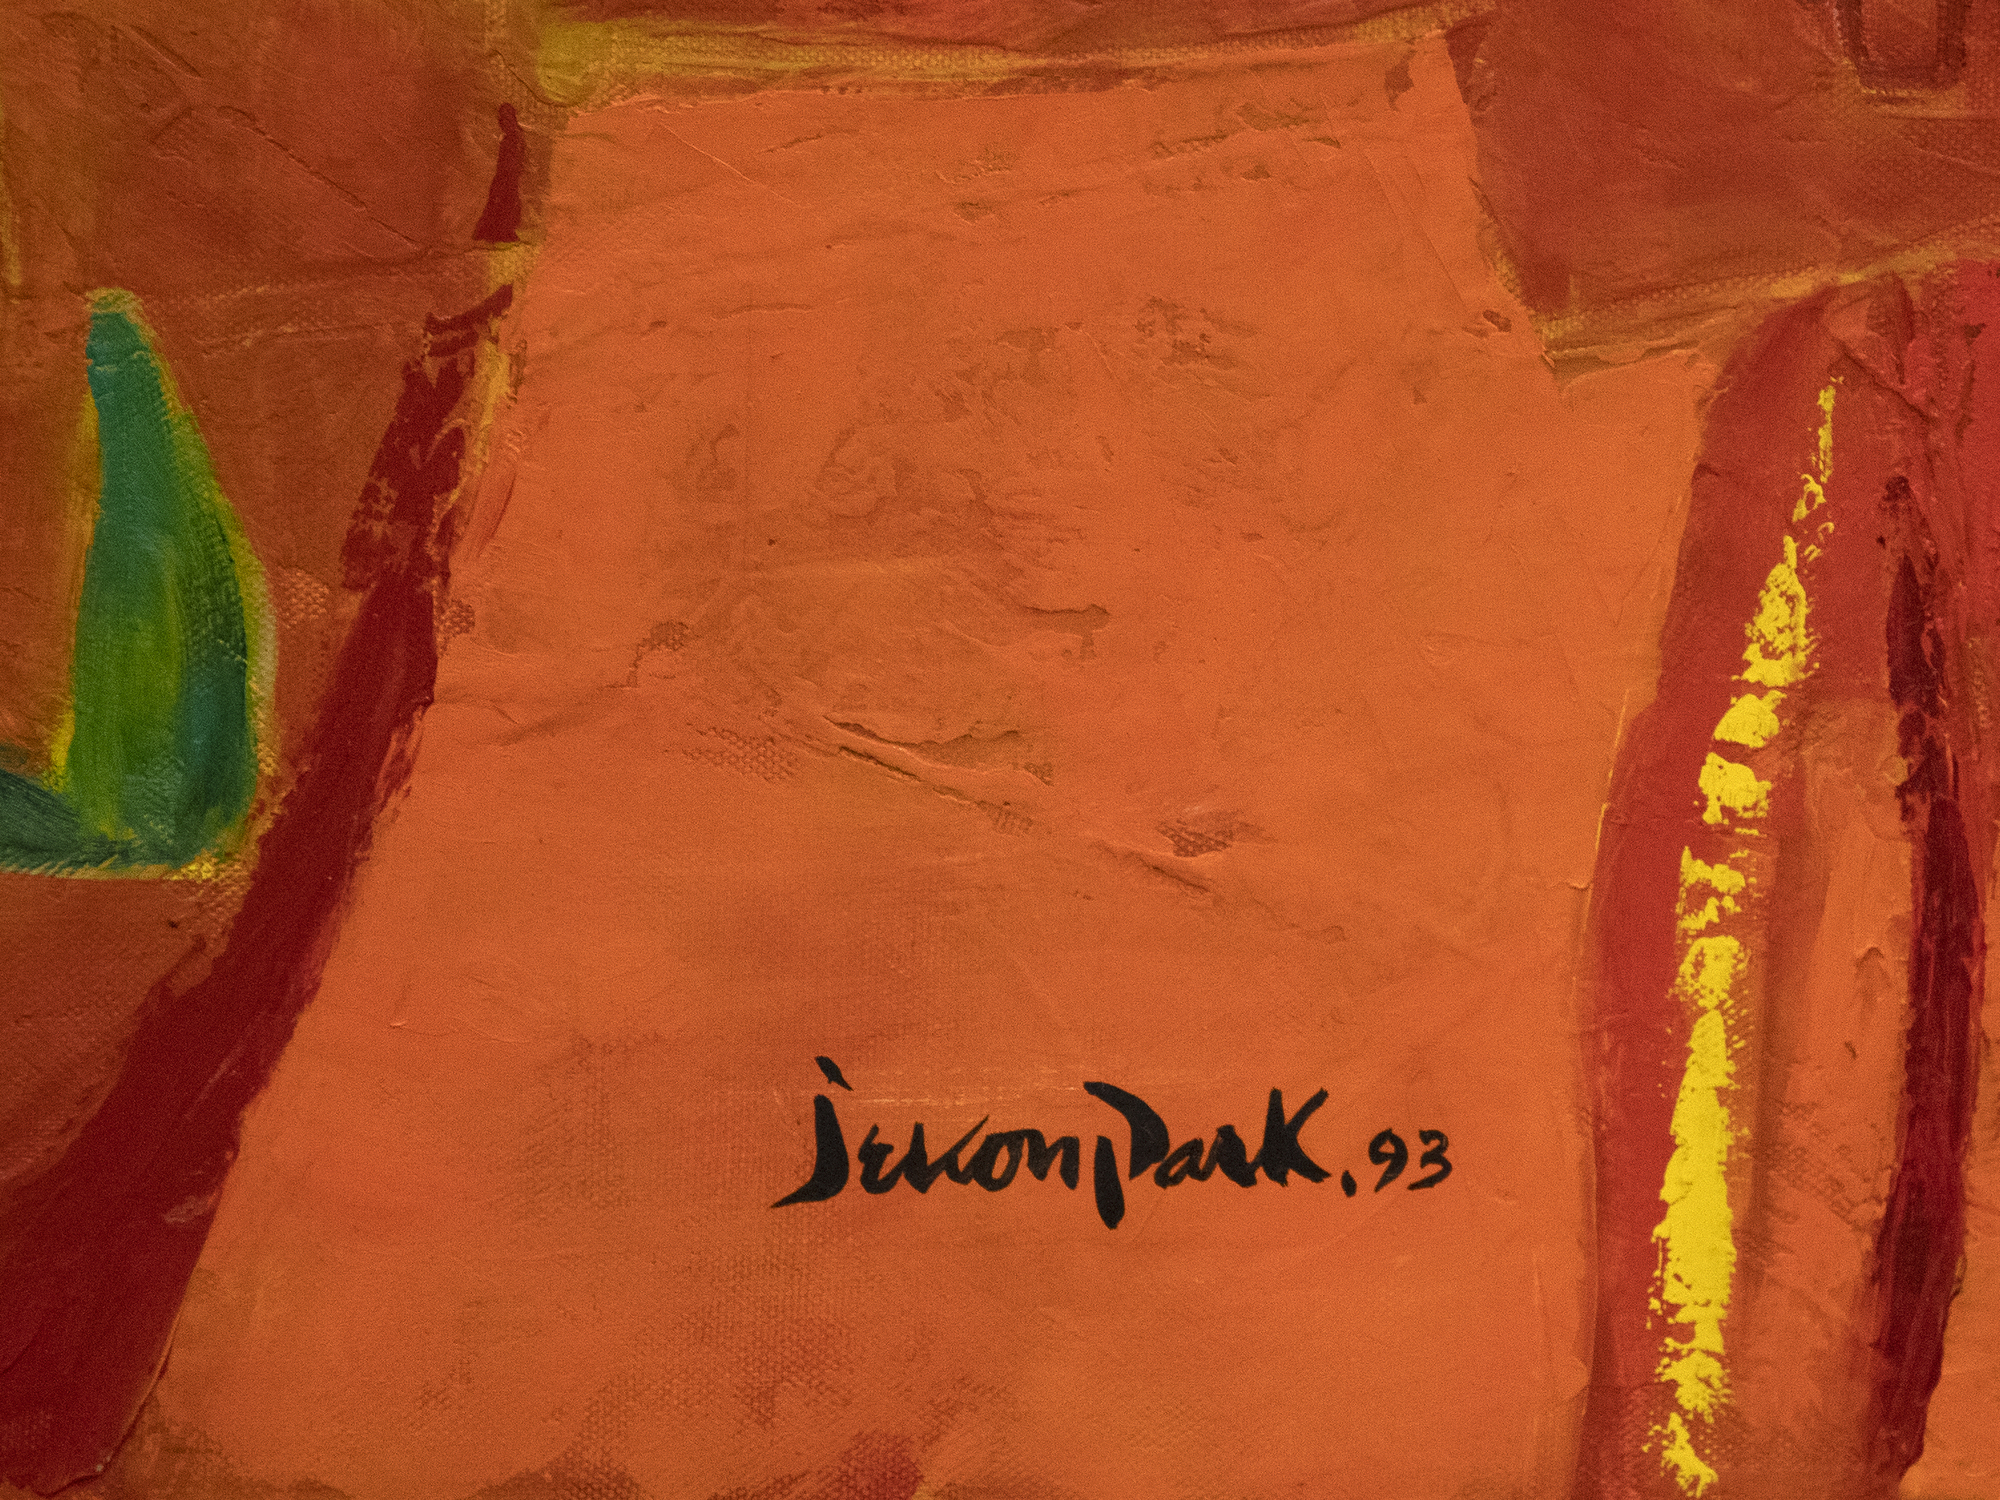 JAE KON PARK - 无标题 - 画布上的油画 - 51 1/4 x 64 in.